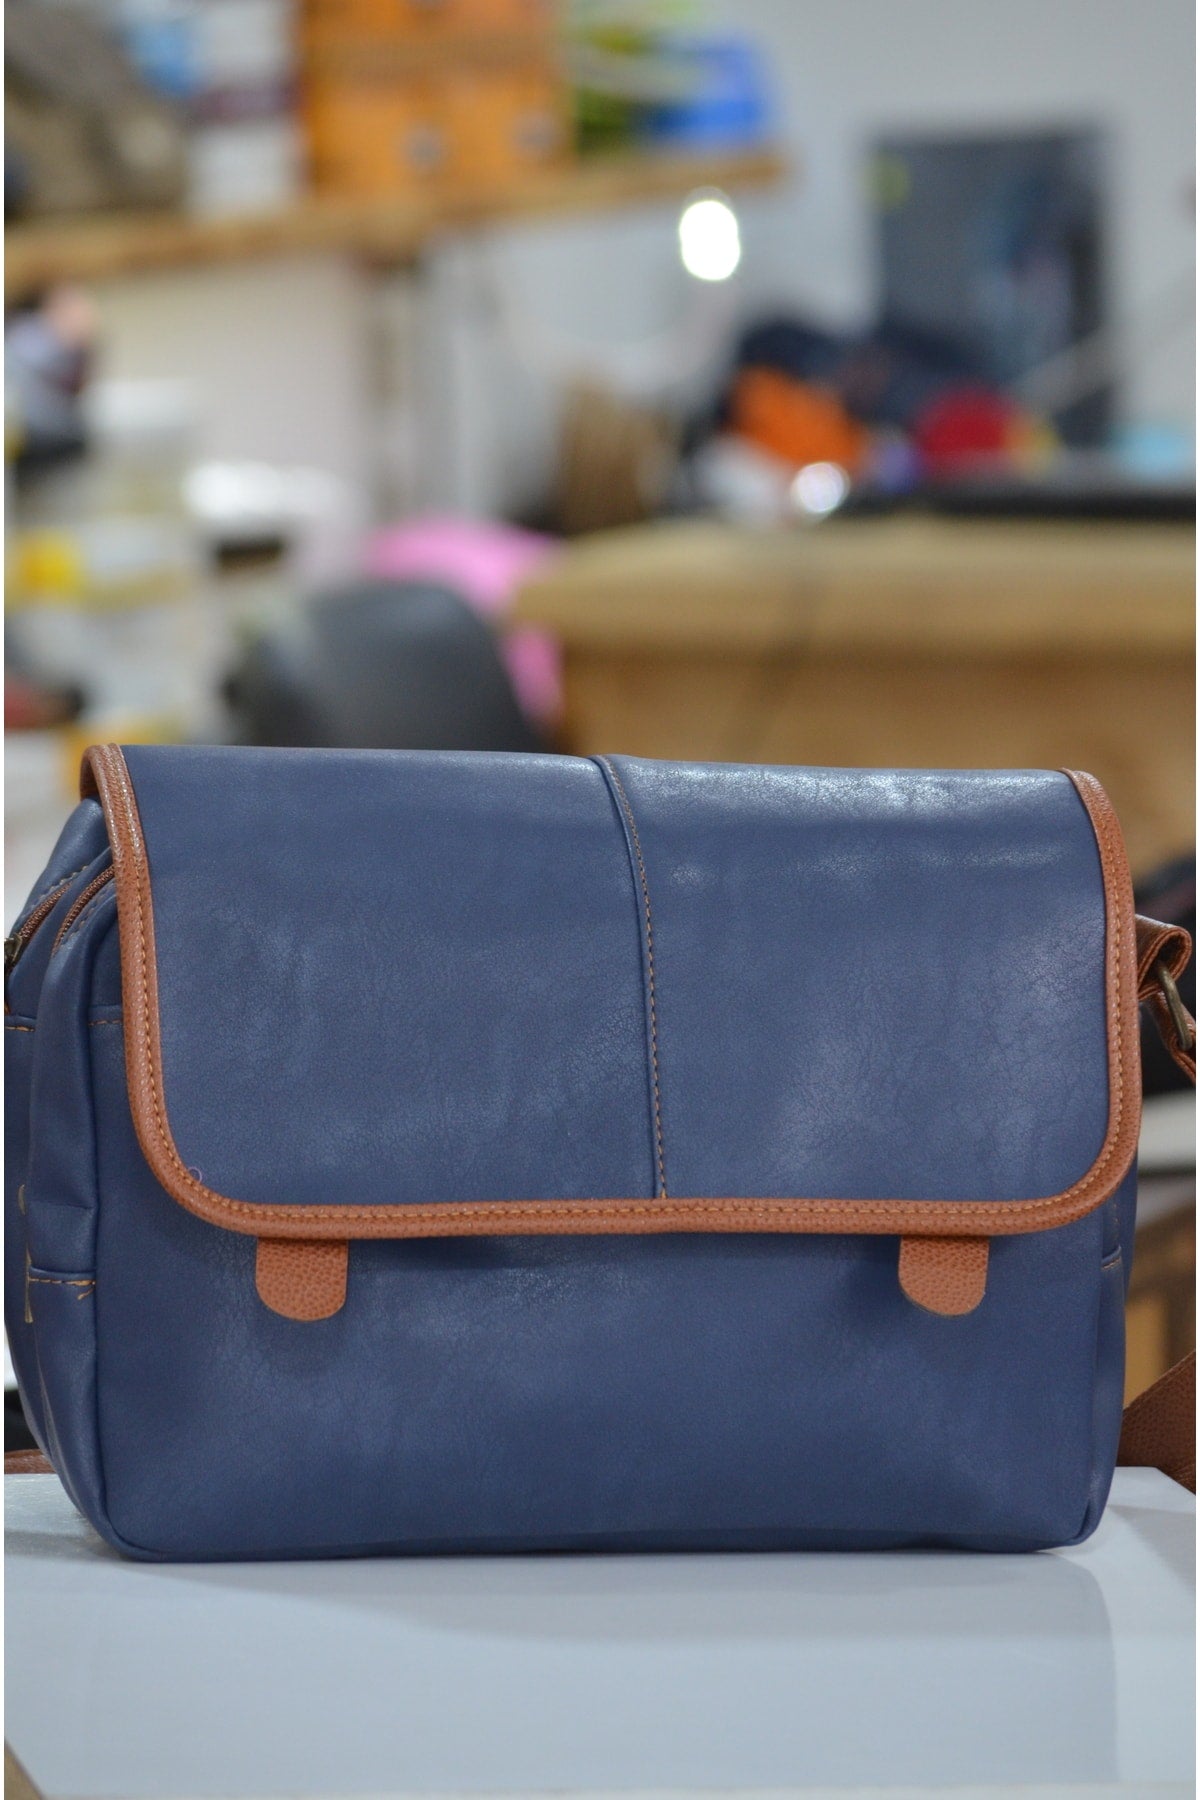 Handy Unisex Navy Blue Tobacco Messenger Bag, Briefcase, Travel Bag with Zipper Cover